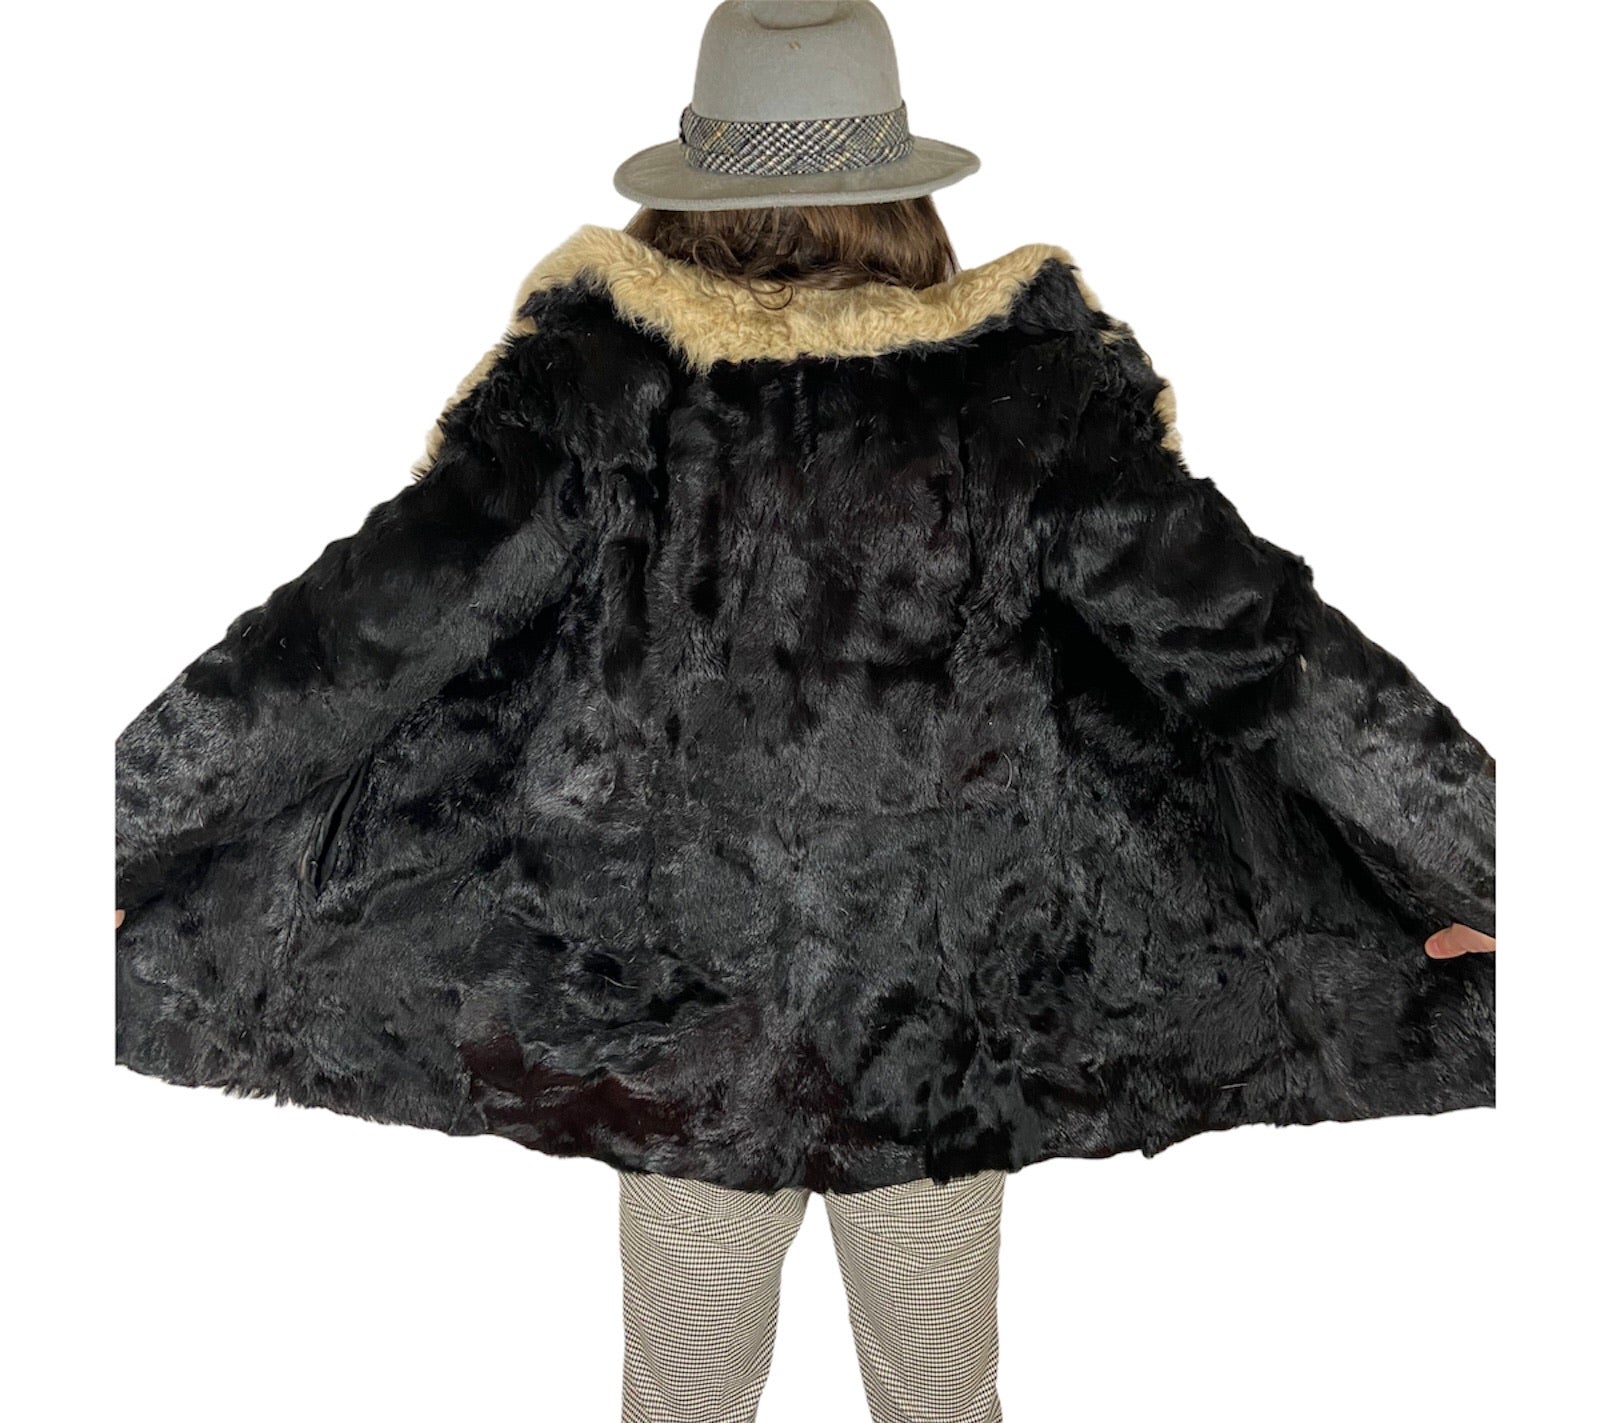 Vintage Black Real Goat Fur Coat Size: Medium Women’s / Small Women’s